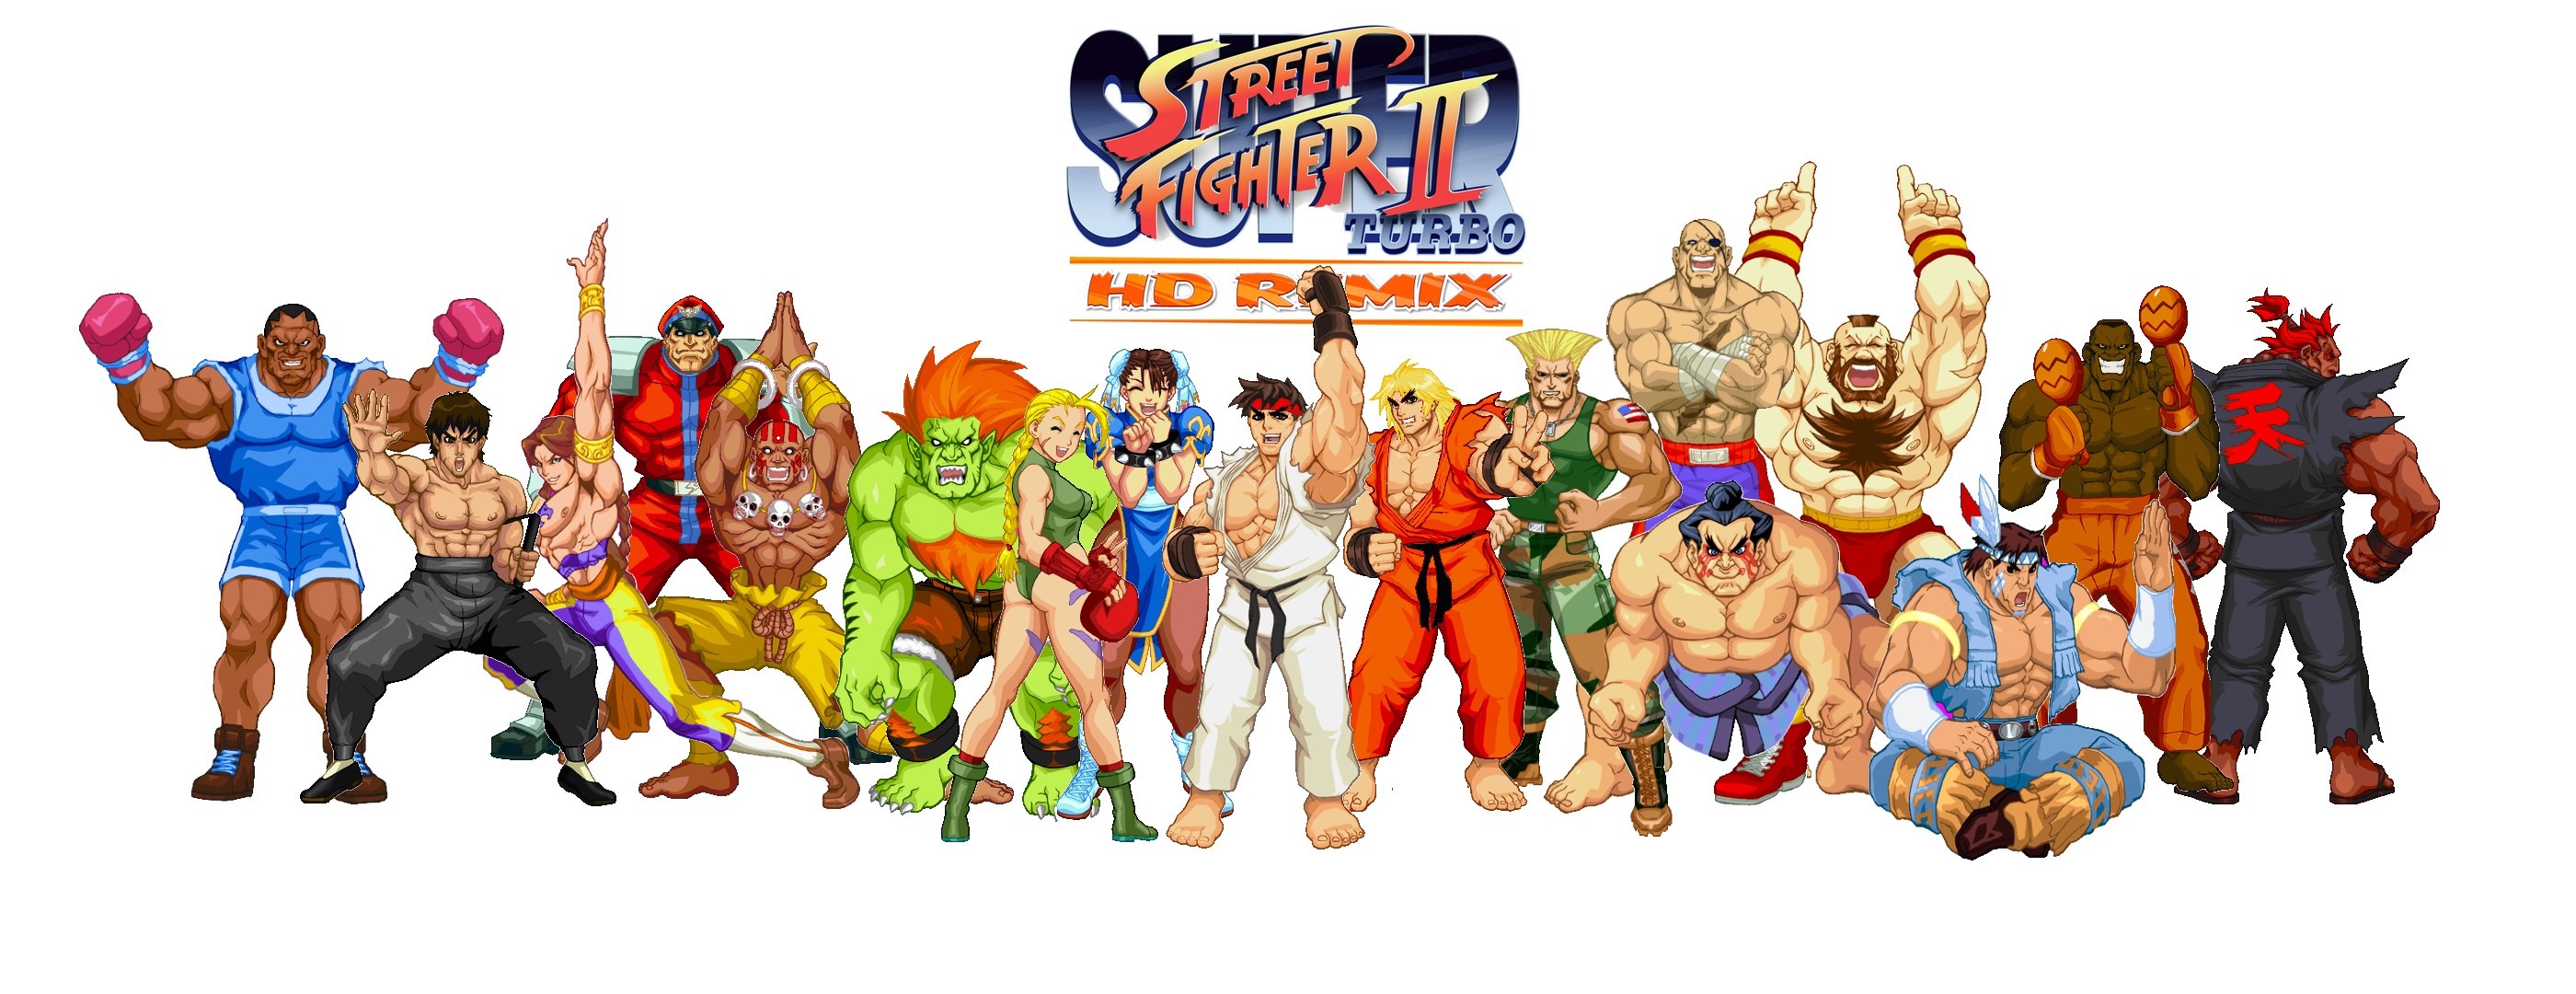 Super Street Fighter 2 turbo hd remix by juniorbunny